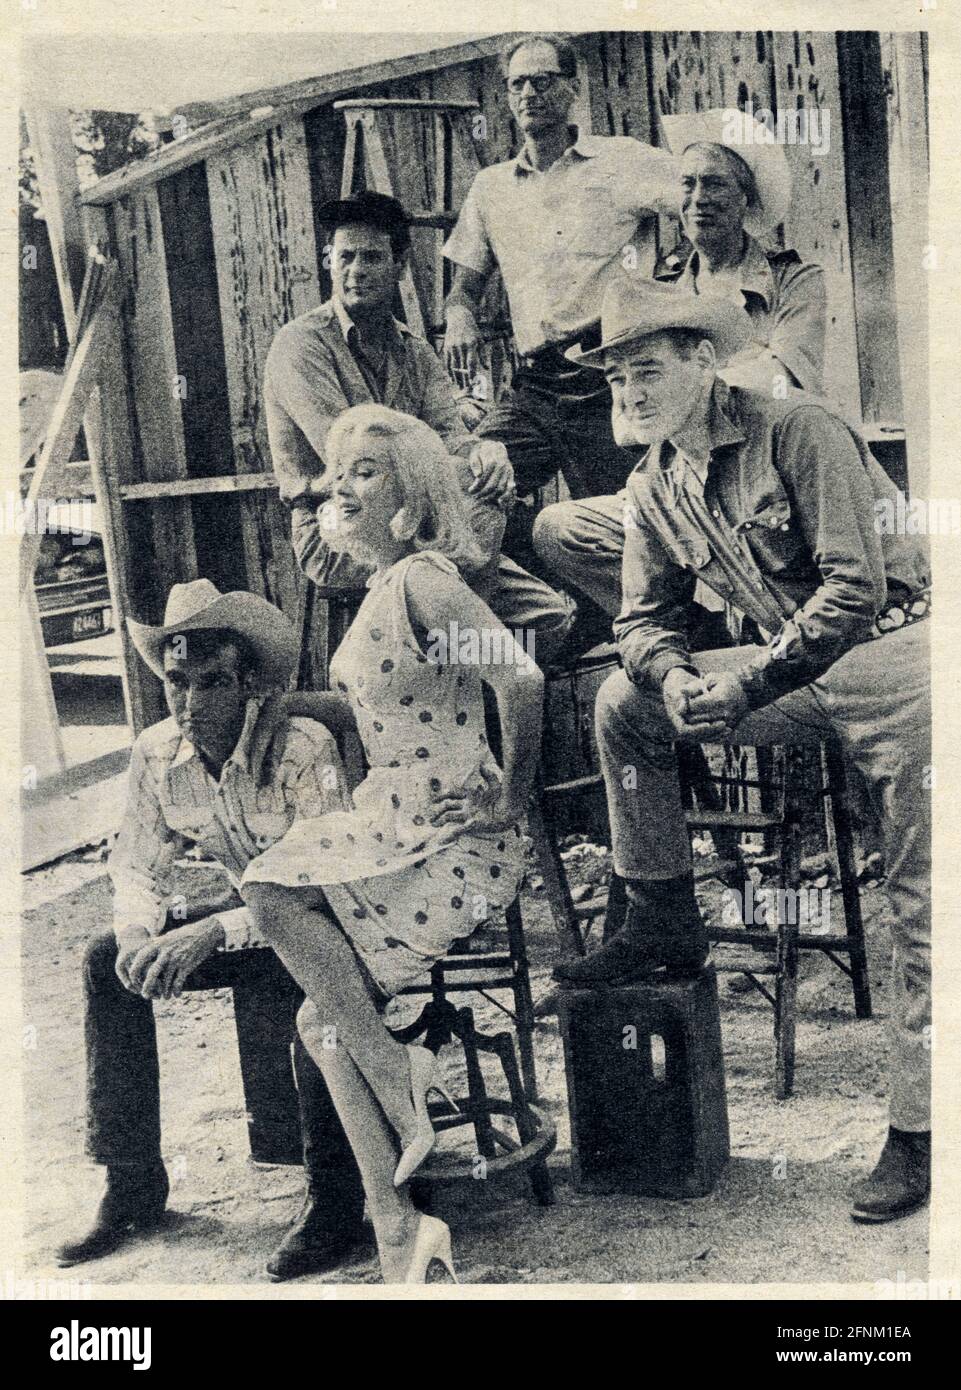 1er rang-Montgomery Clift, Marilyn, Gable. Derrière-Eli Wallach, Miller, John Huston. 1961 Stock Photo